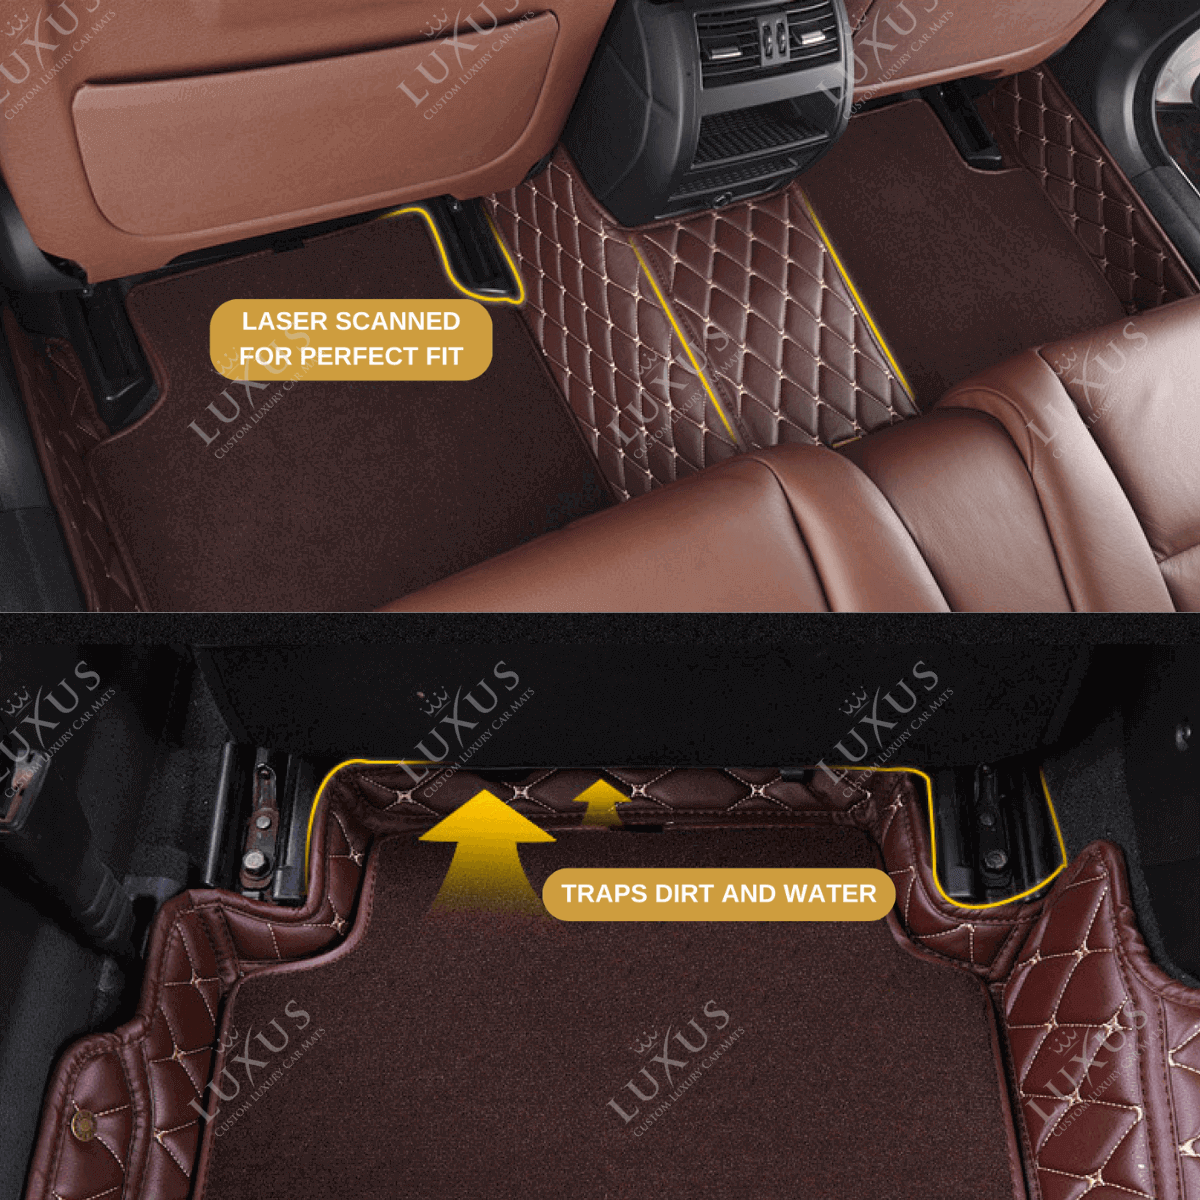 Black & Black Stitching Honeycomb Base & Grey Top Carpet Double Layer Luxury Car Mats Set